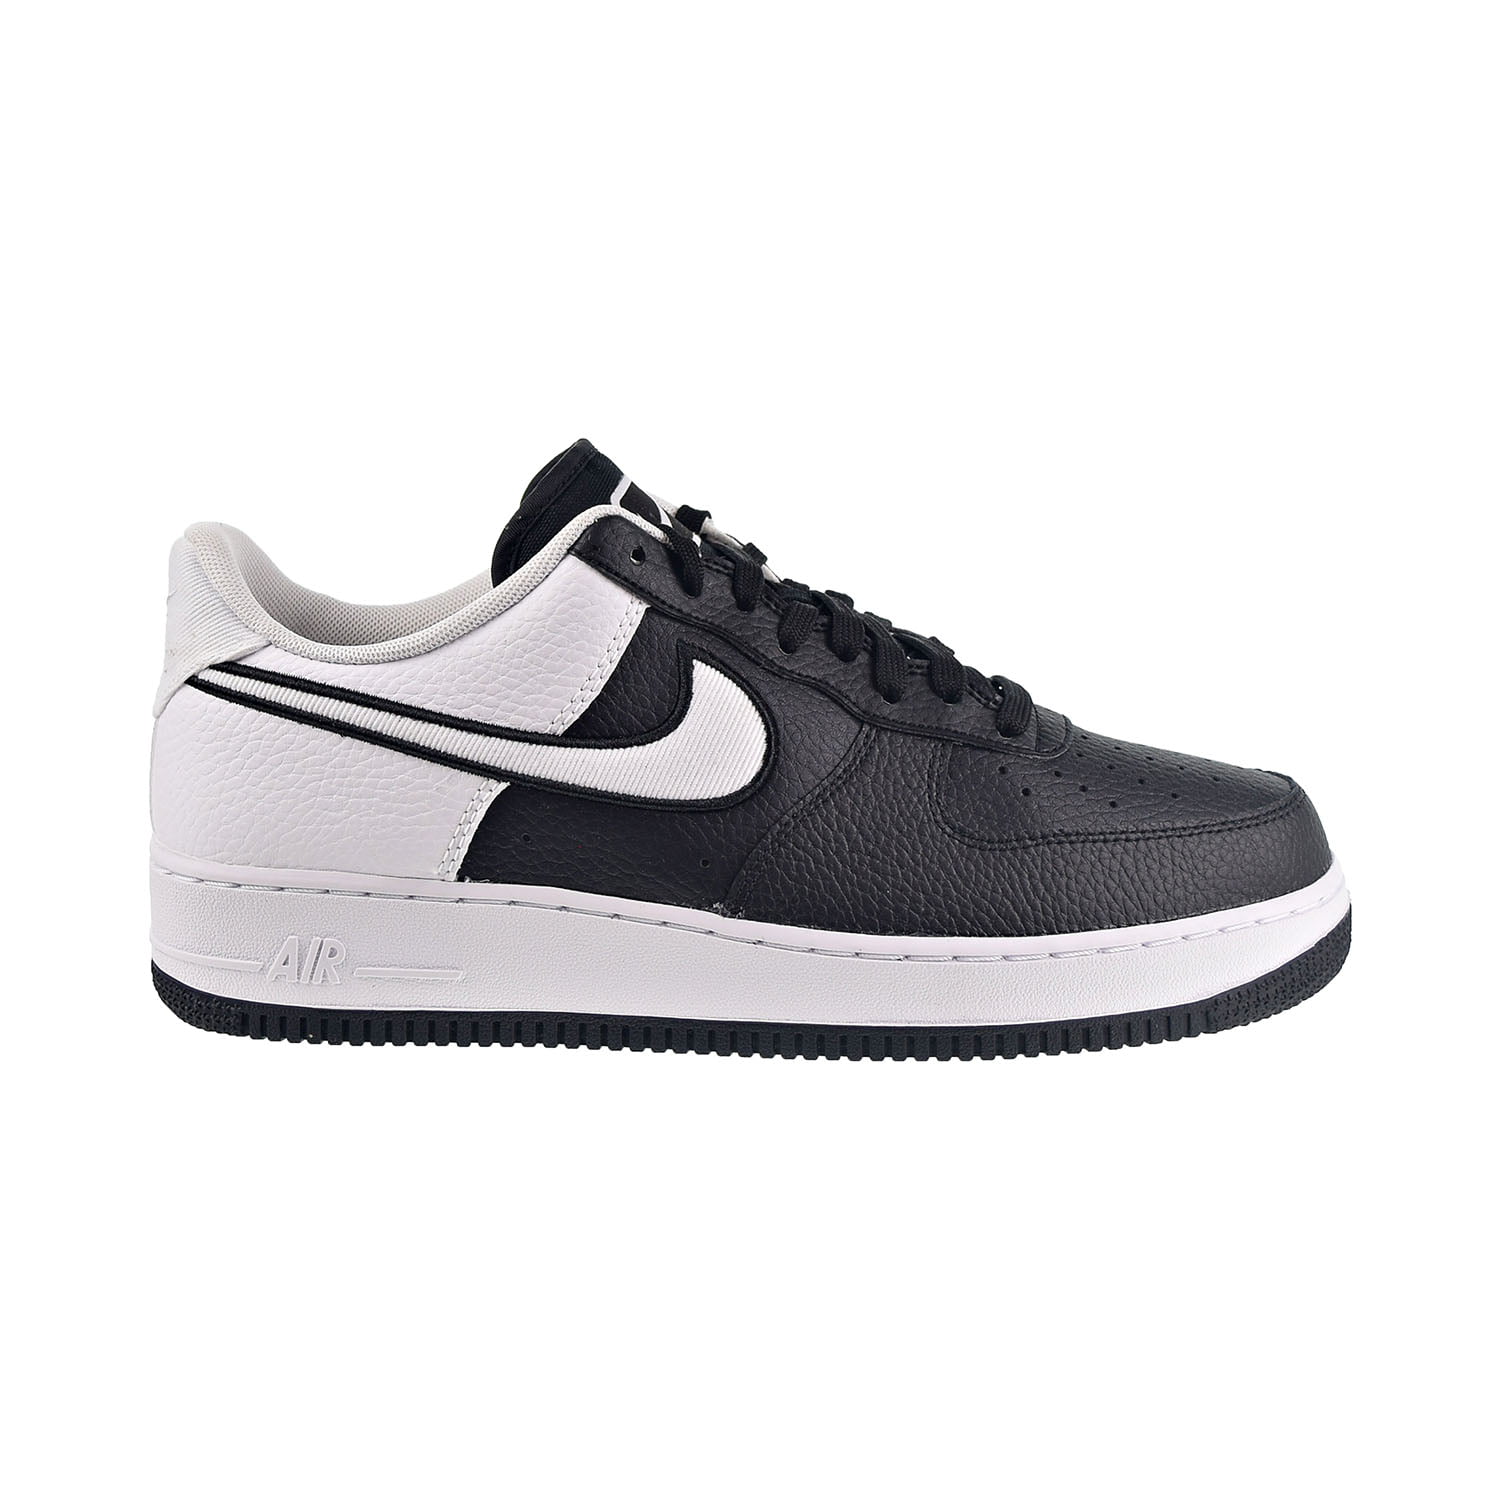 Nike Air Force 1 '07 LV8 1 Men's Shoes Black-White ao2439-001